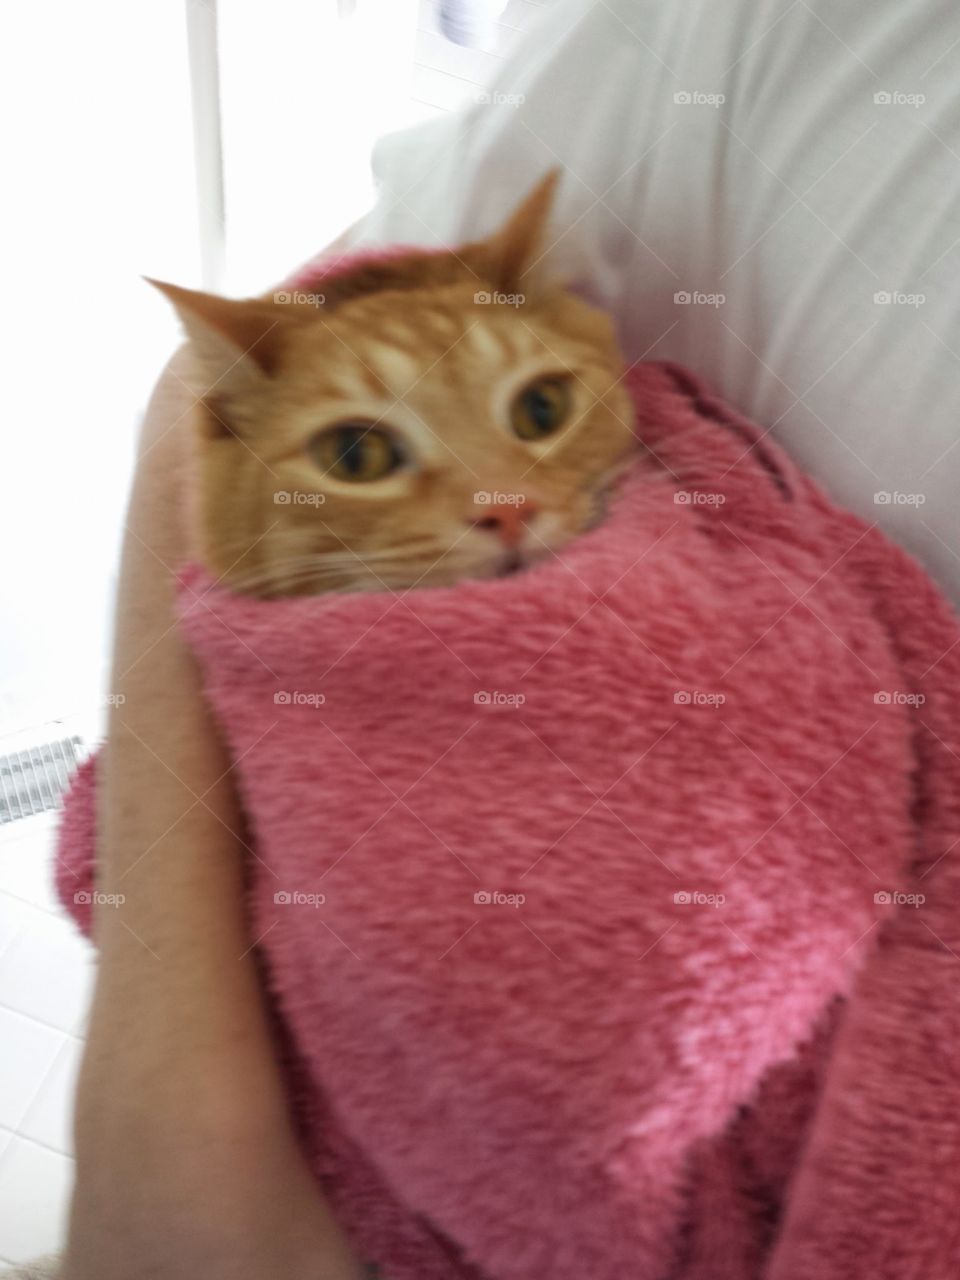 my cat loves baths